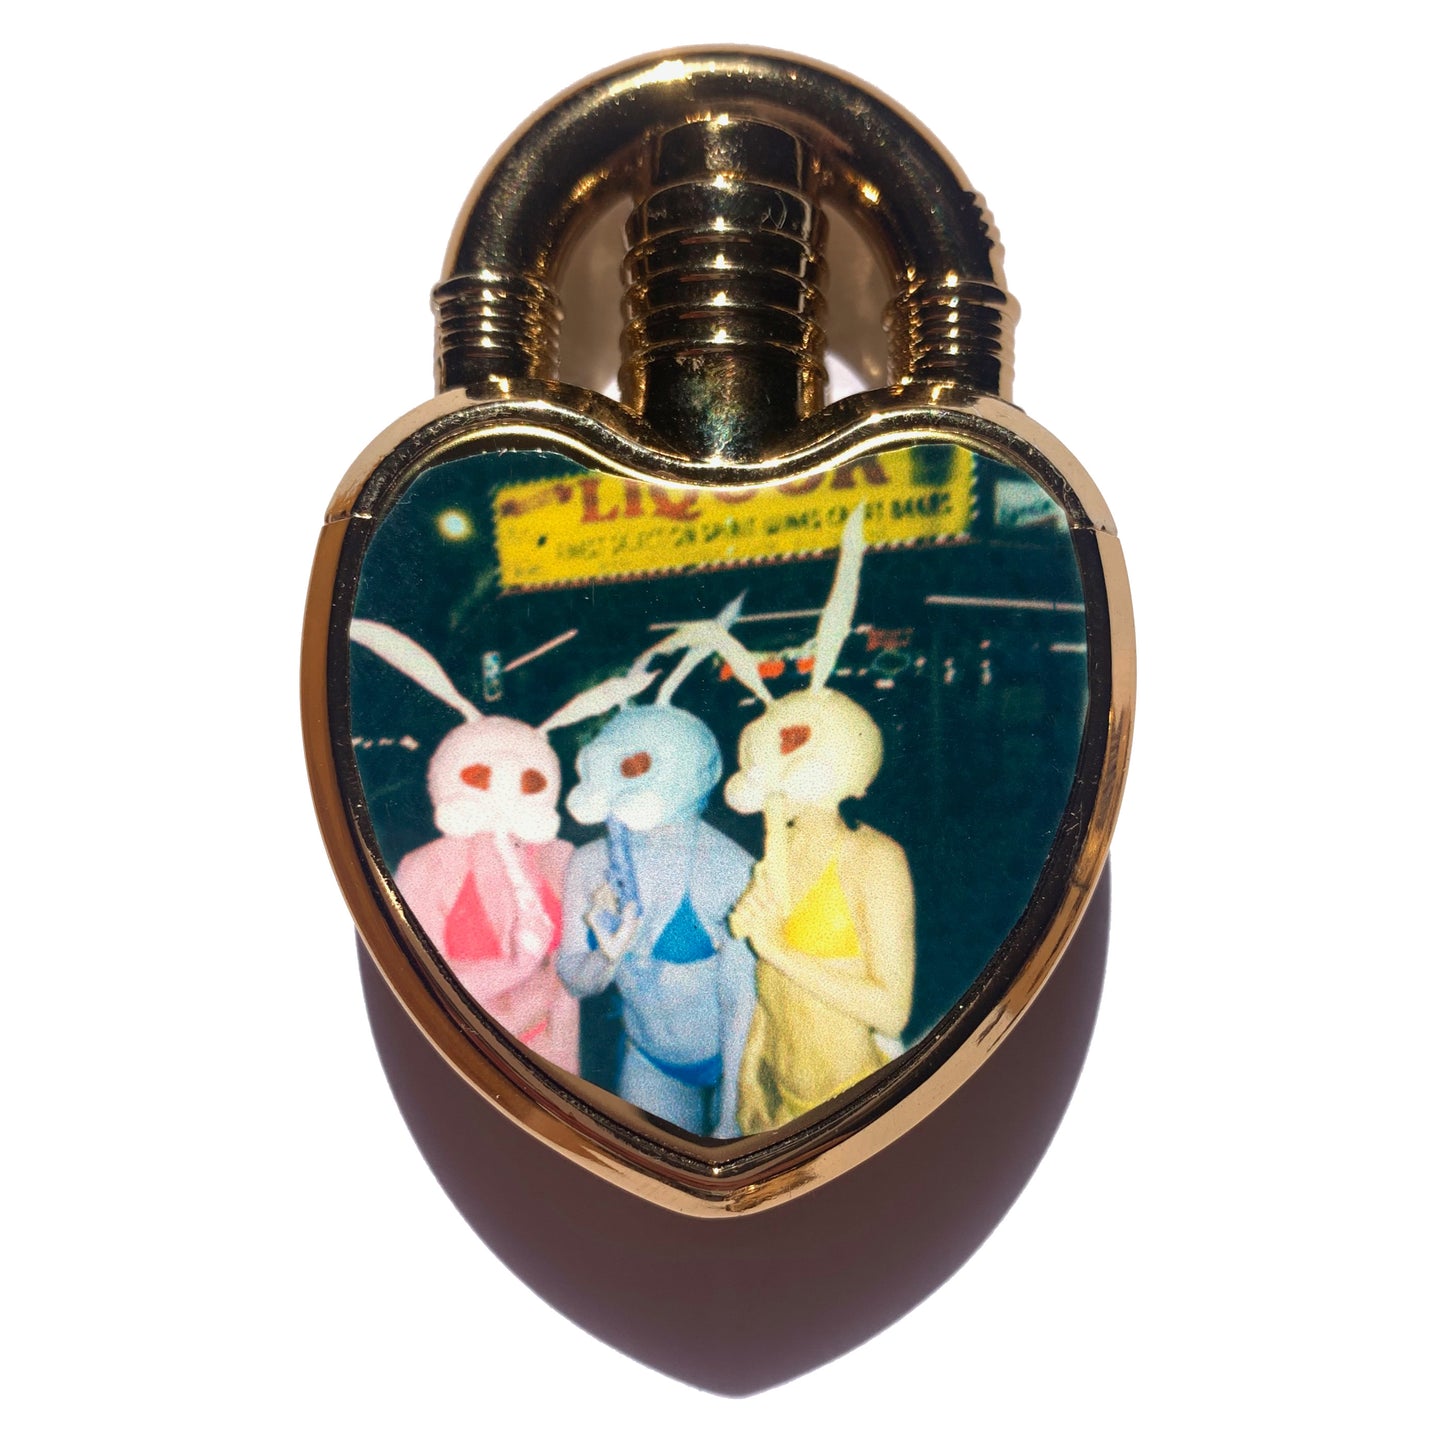 The Circus Liquor Robbery Bunny Girls Gold Heart Lighter